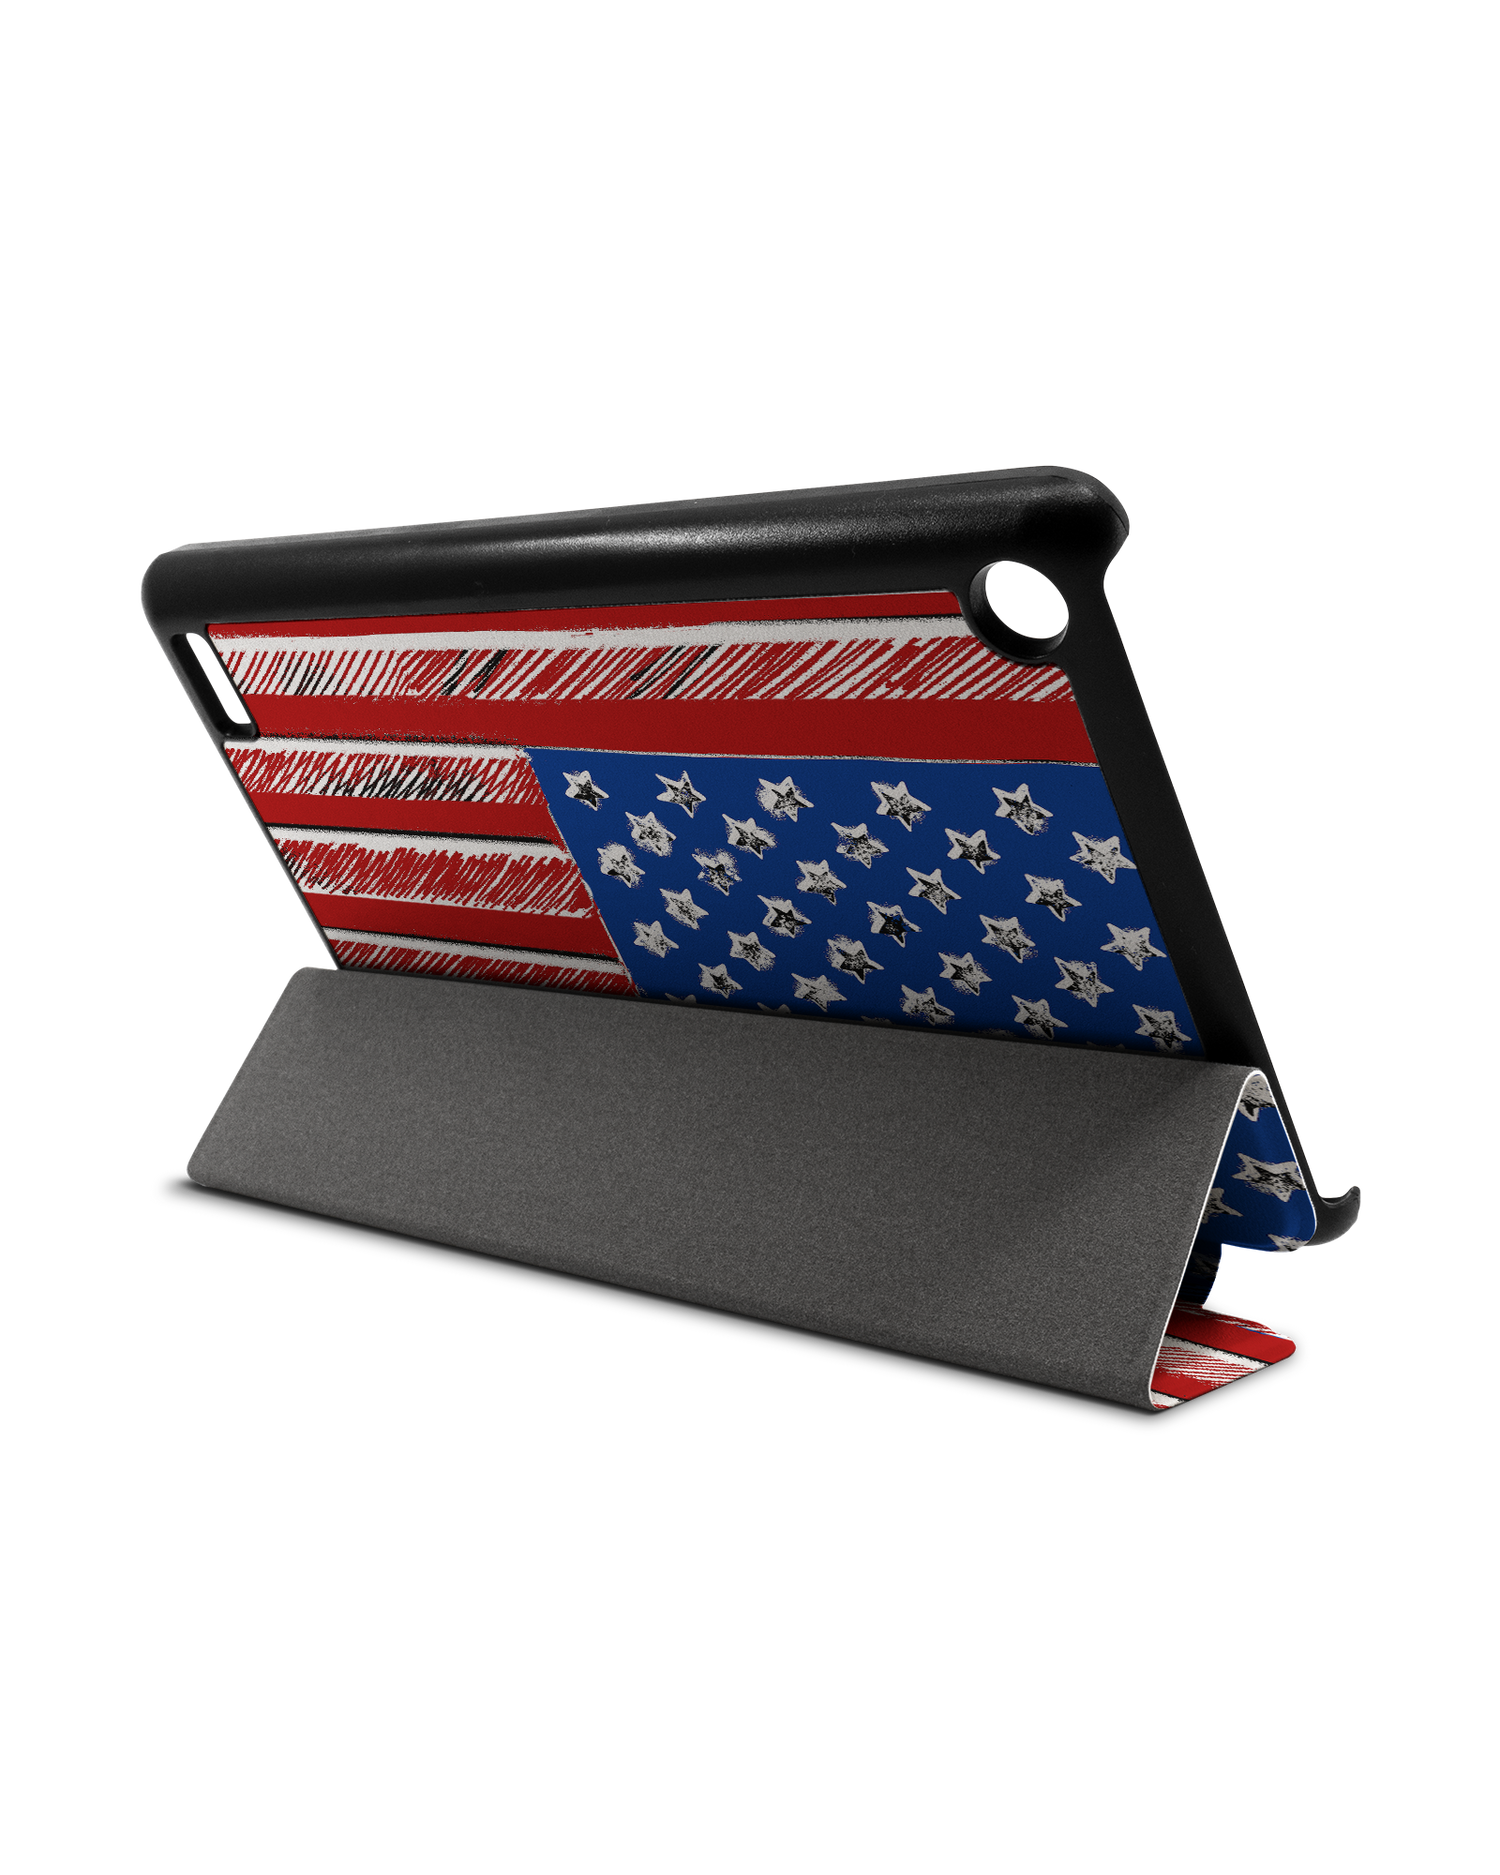 American Flag Color Tablet Smart Case für Amazon Fire 7: Aufgestellt im Querformat